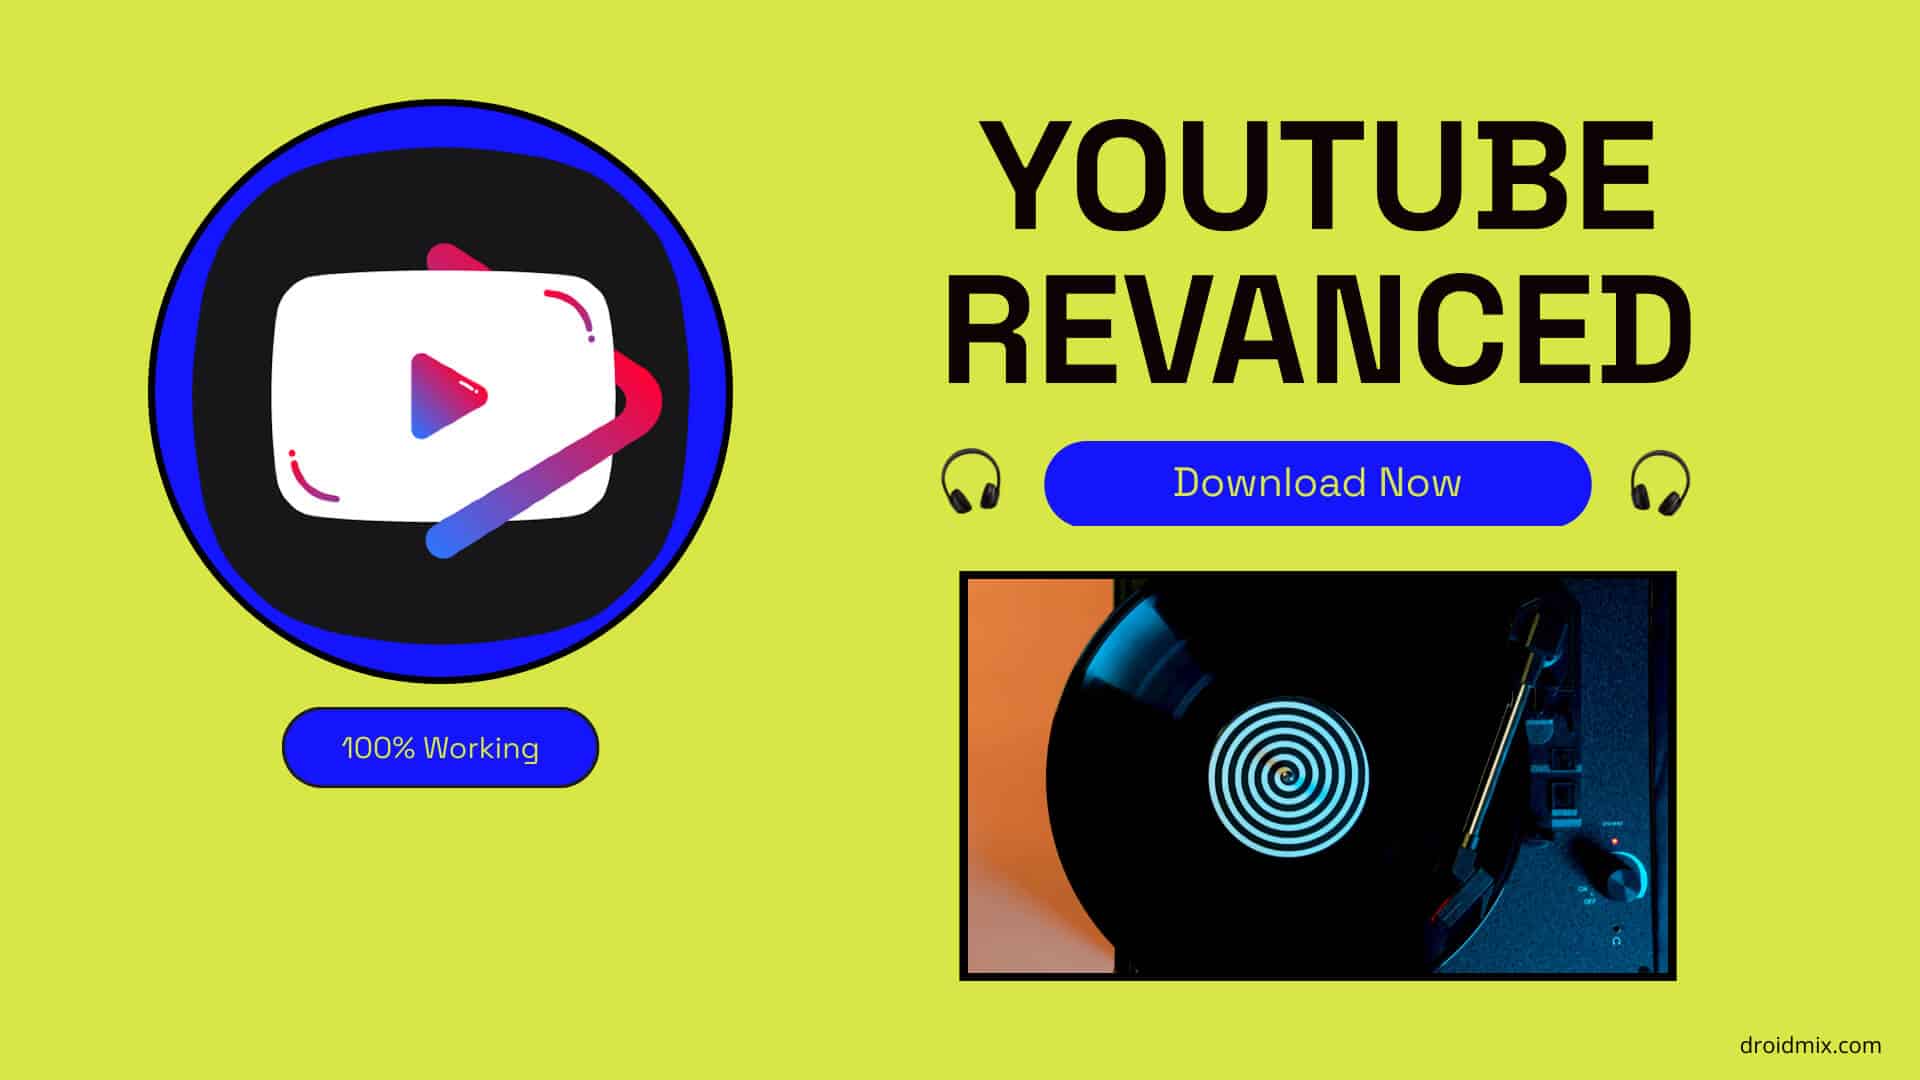 Download YouTube Revanced App